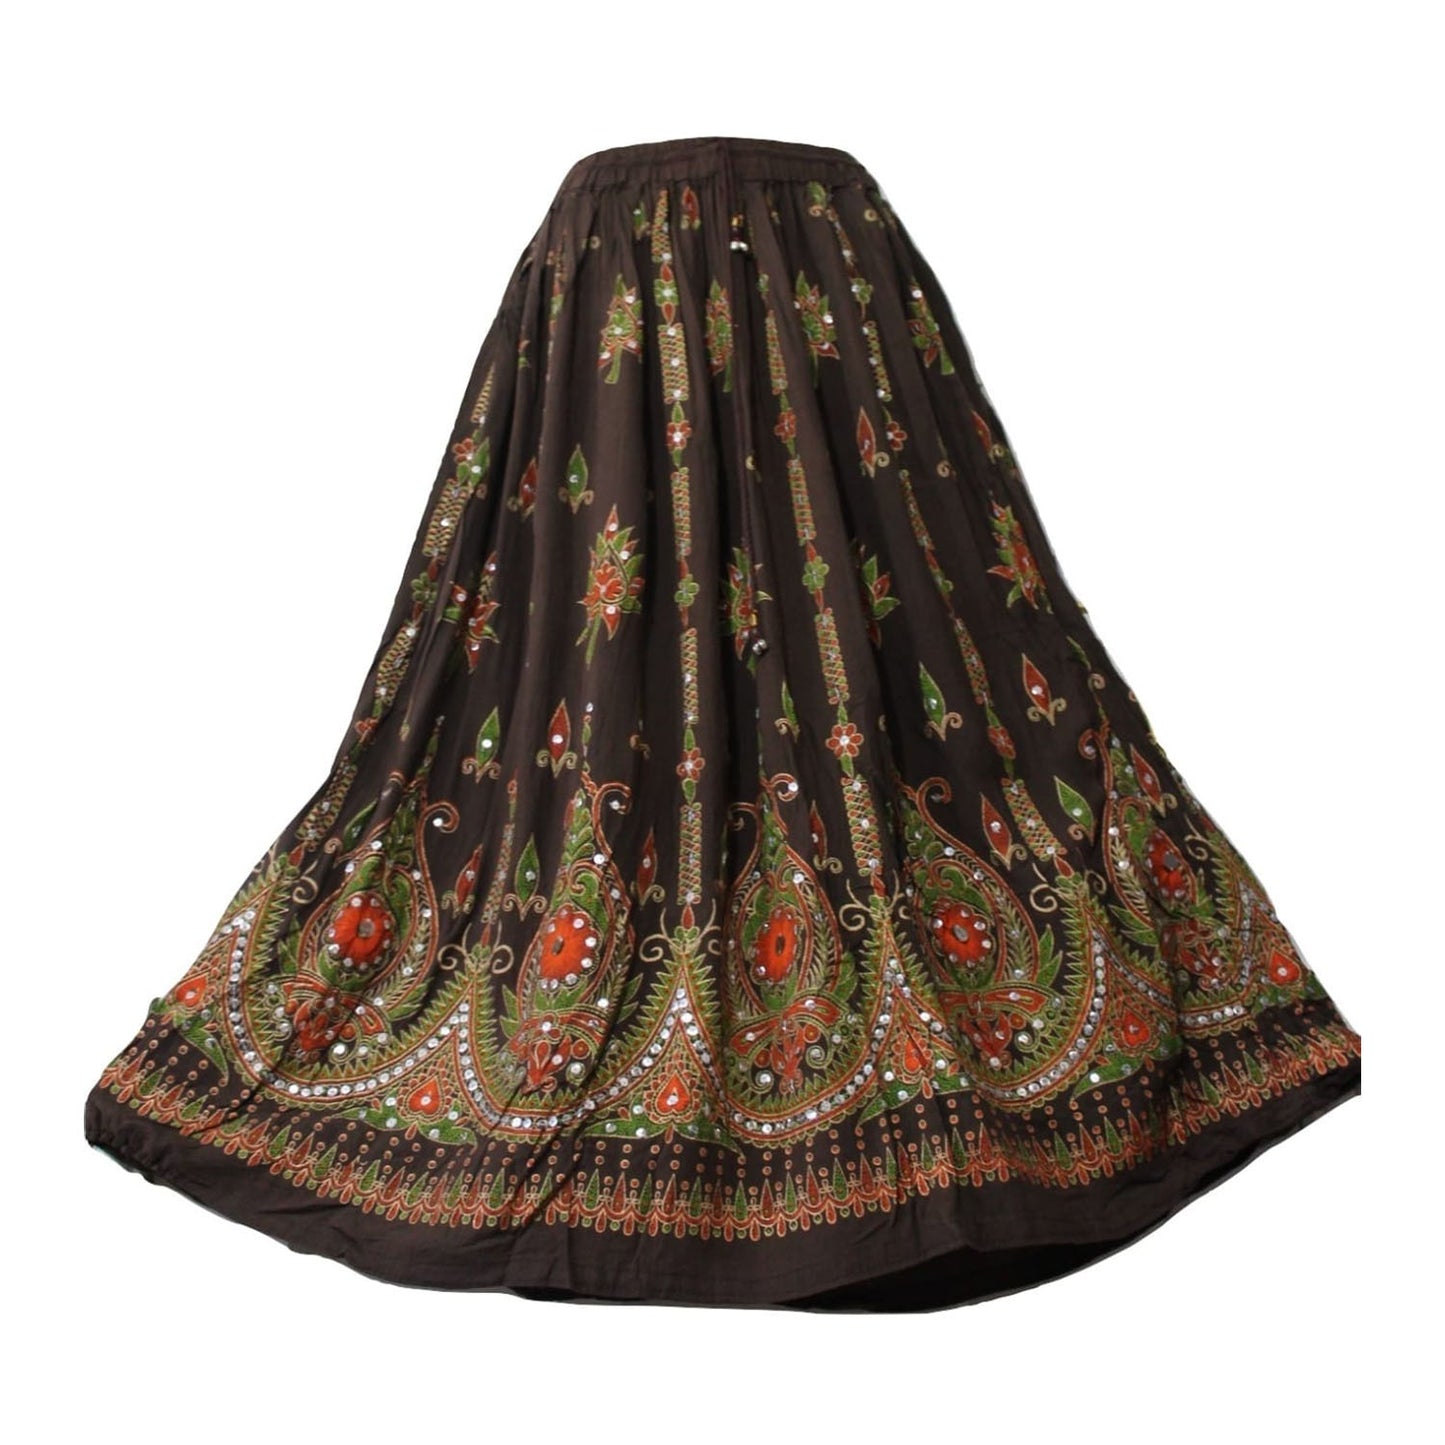 Ganesha Handicrafts-Sequin Skirt Long Dark Shades, Womens Sequin Skirt Long Dark Shades, Women's Fashion Sequin Skirts, Long Sequin Skirts, Brown Colour Sequin Skirt, Dark Shades Long Sequin Skirt.